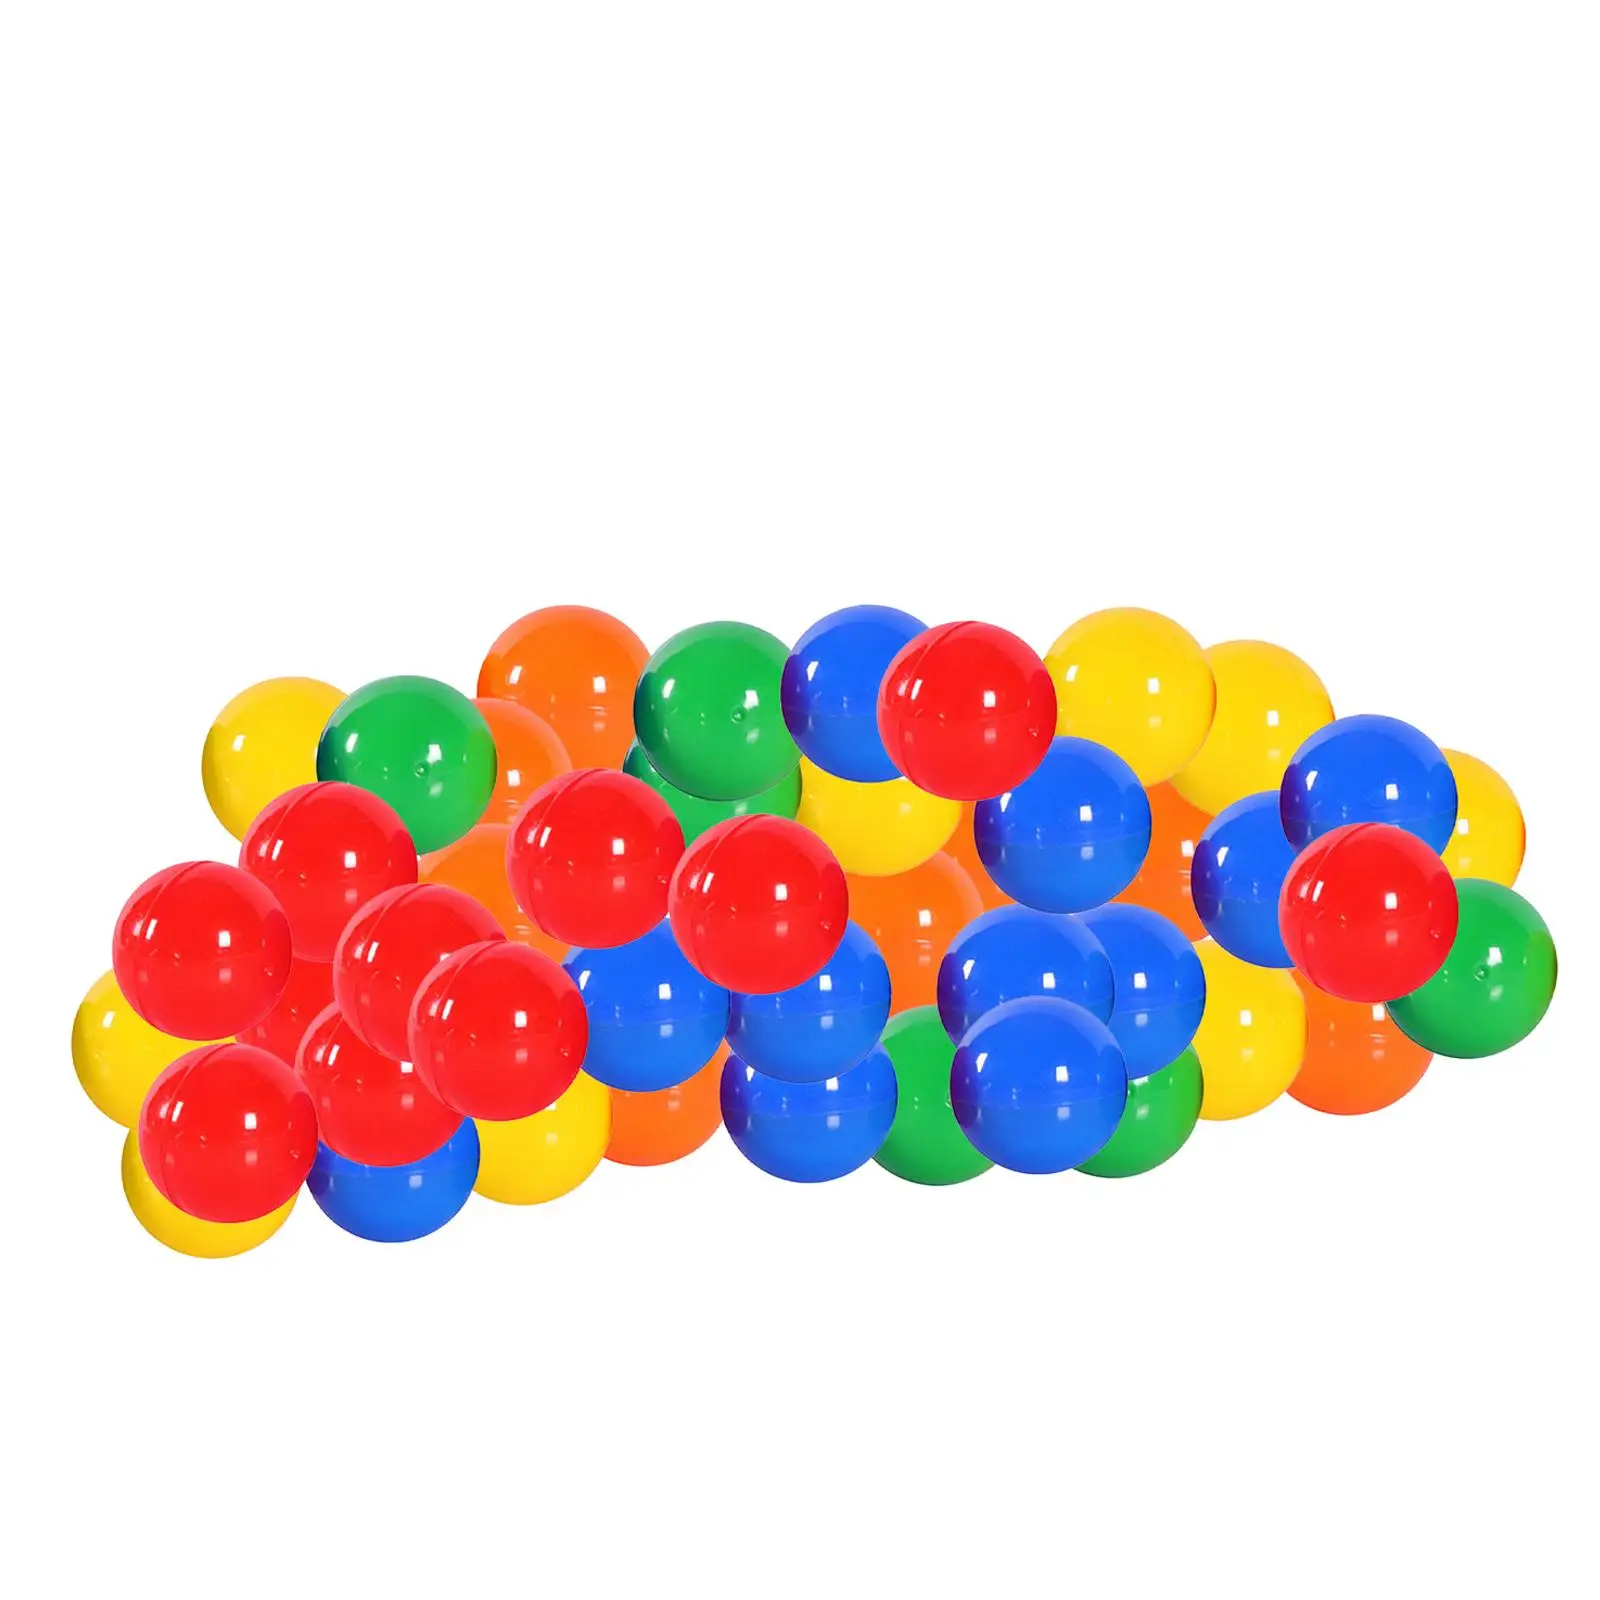 50x Bingo Ball Raffle Balls Portable Replace Accs Tally Ball Lottery Balls for